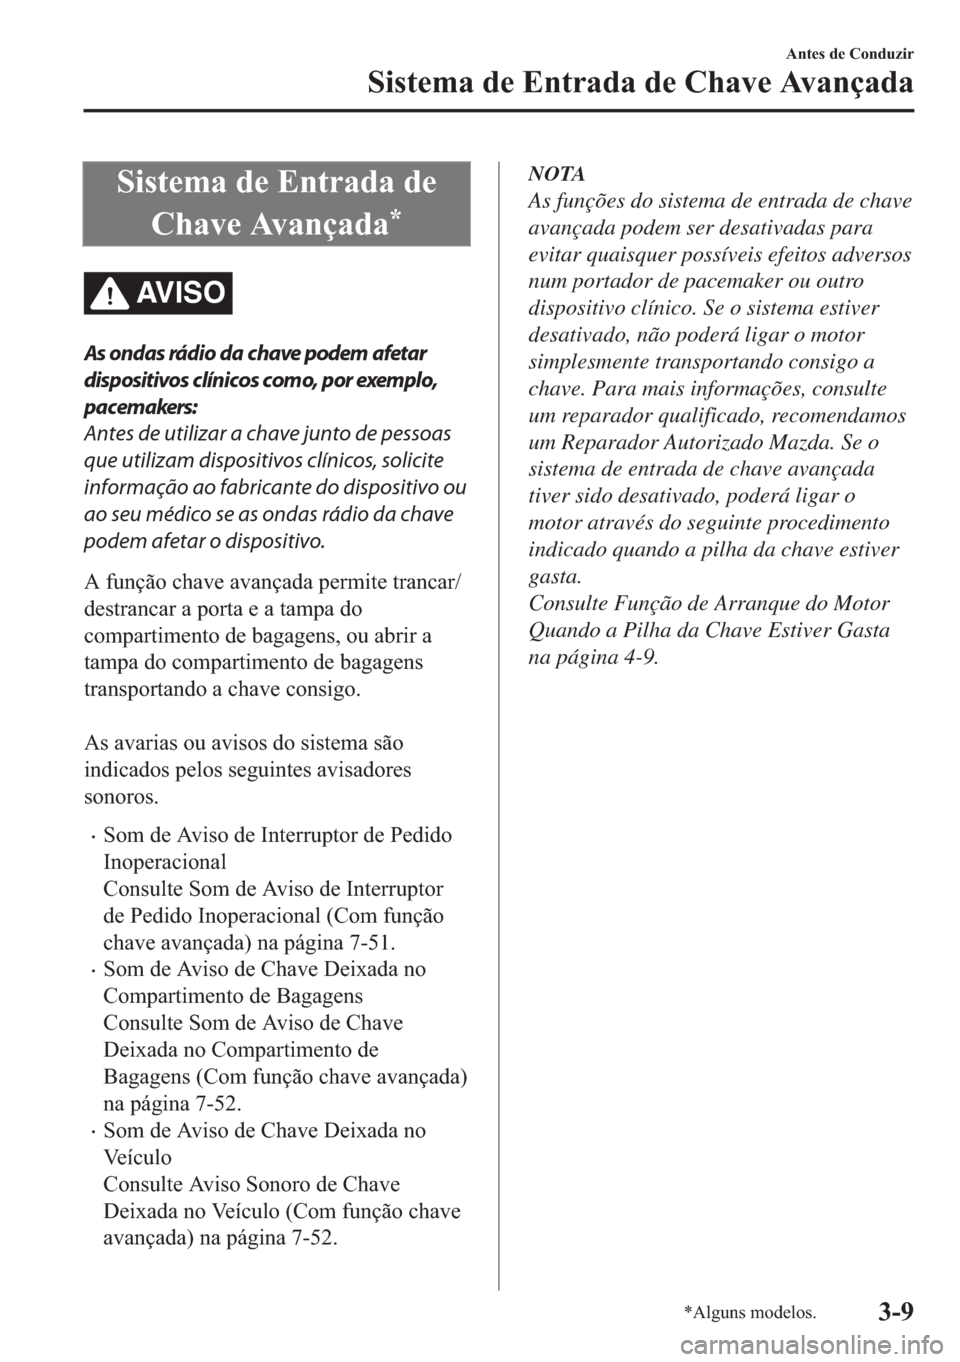 MAZDA MODEL 2 2019  Manual do proprietário (in Portuguese) �6�L�V�W�H�P�D��G�H��(�Q�W�U�D�G�D��G�H
�&�K�D�Y�H��$�Y�D�Q�o�D�G�D
�
AV I S O
As ondas rádio da chave podem afetar
dispositivos clínicos como, por exemplo,
pacemakers:
Antes de utilizar a chav